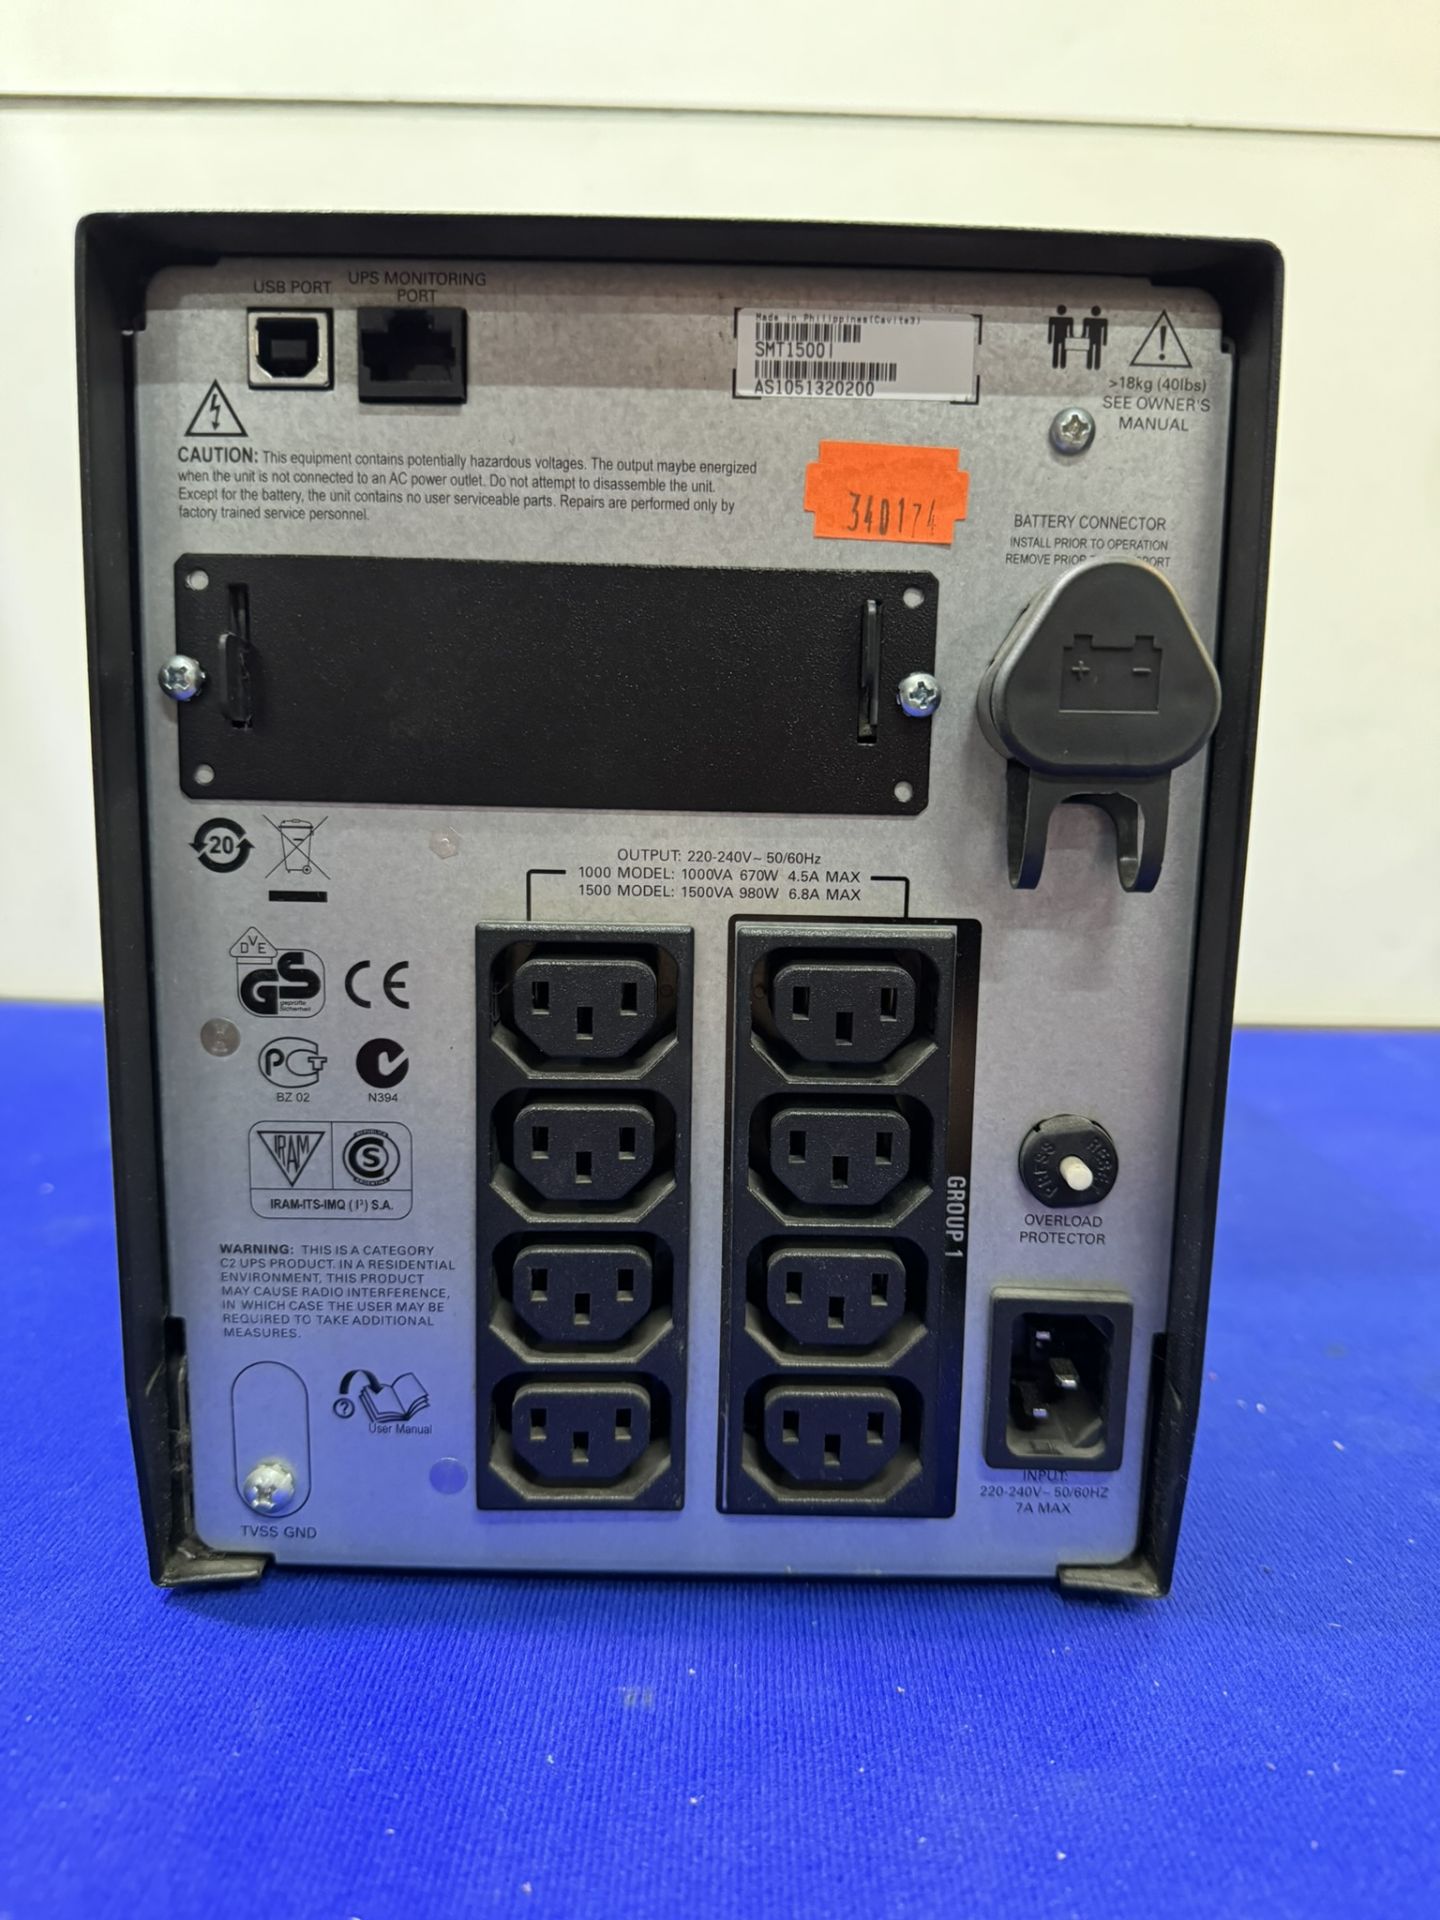 APC Smart-Ups 1500 Server Back Up Battery - Image 4 of 4